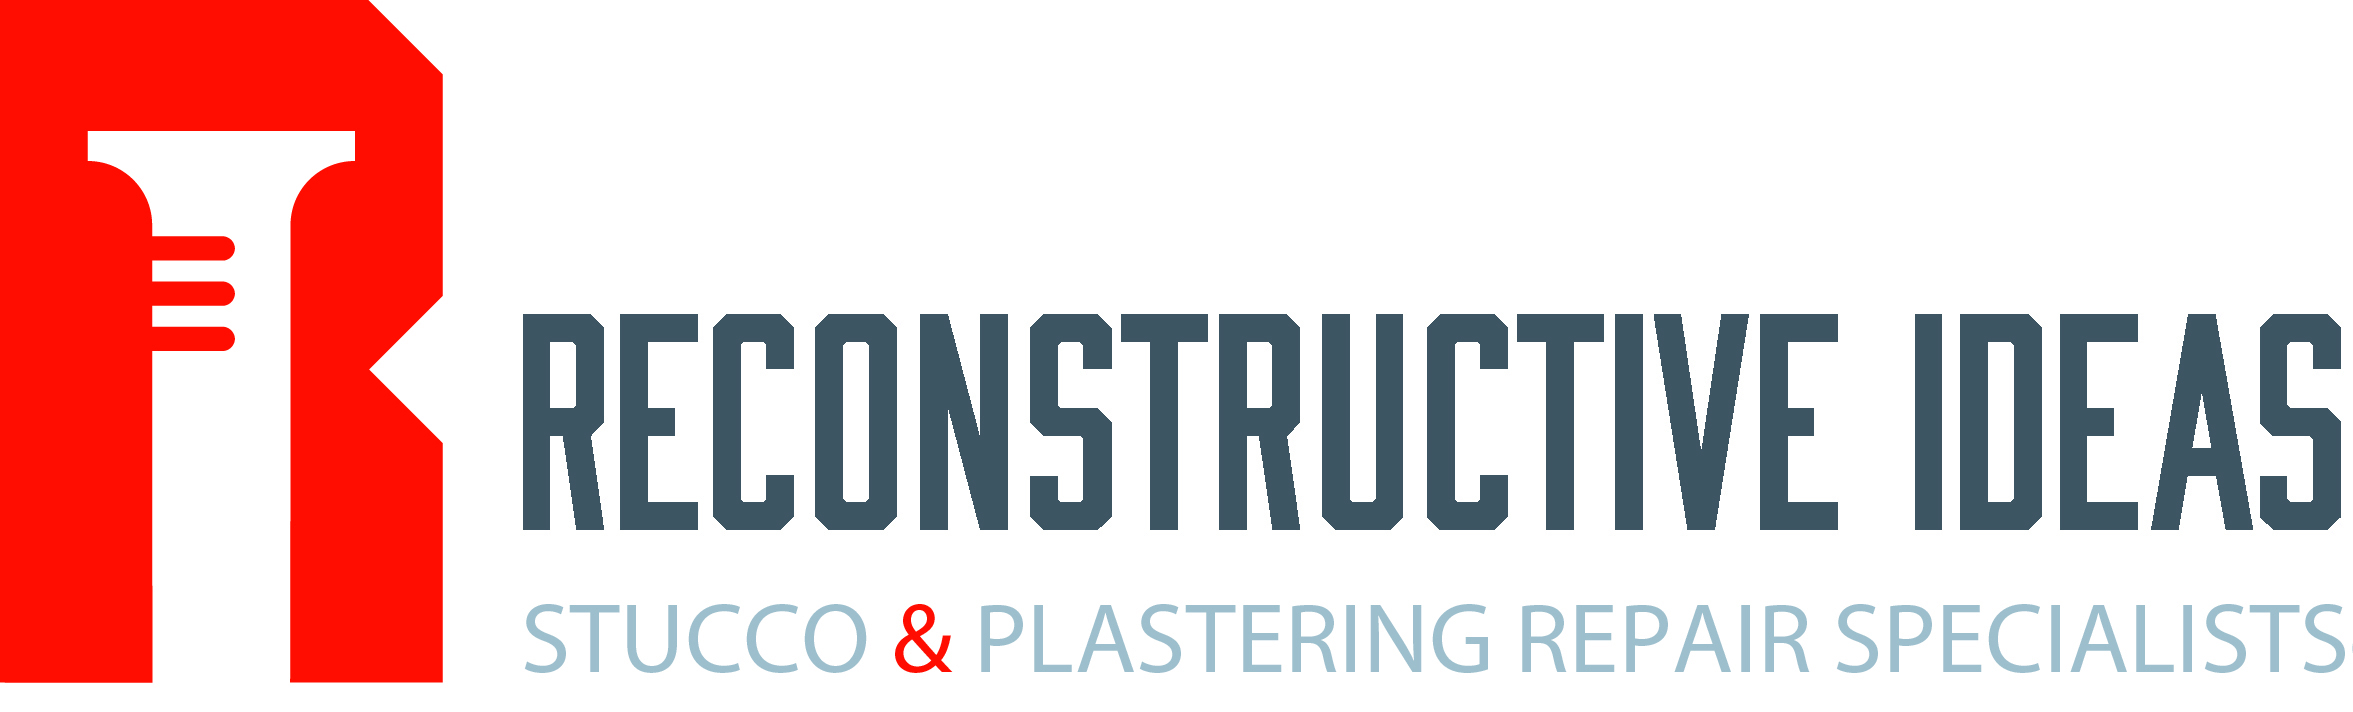 Reconstructive Ideas, LLC Logo